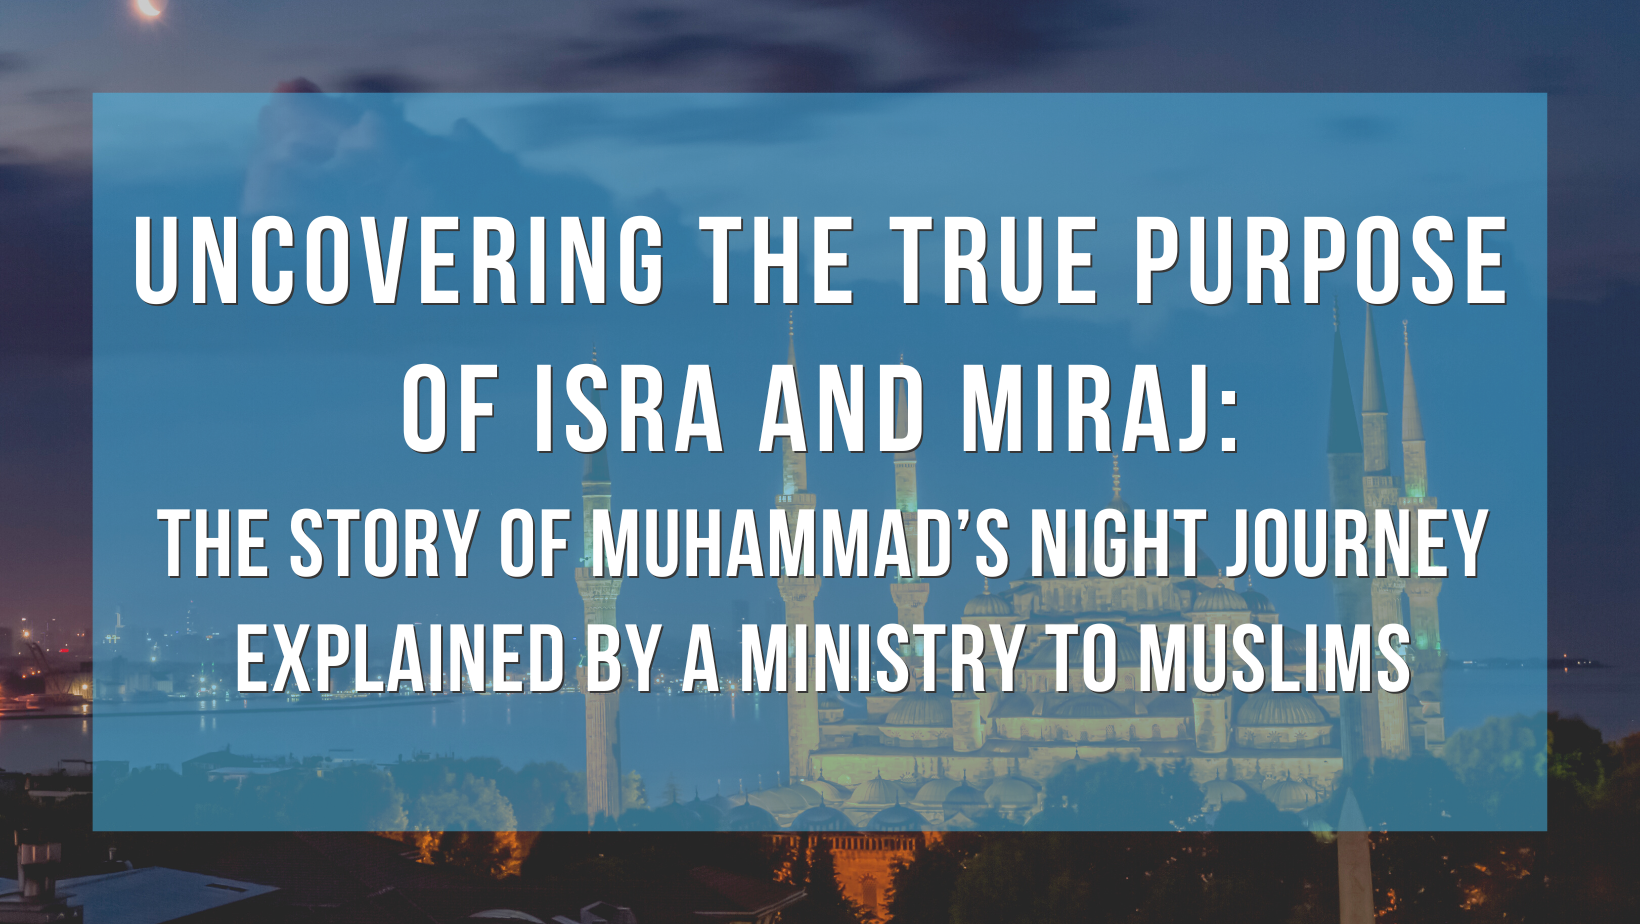 The true purpose of Isra and Miraj